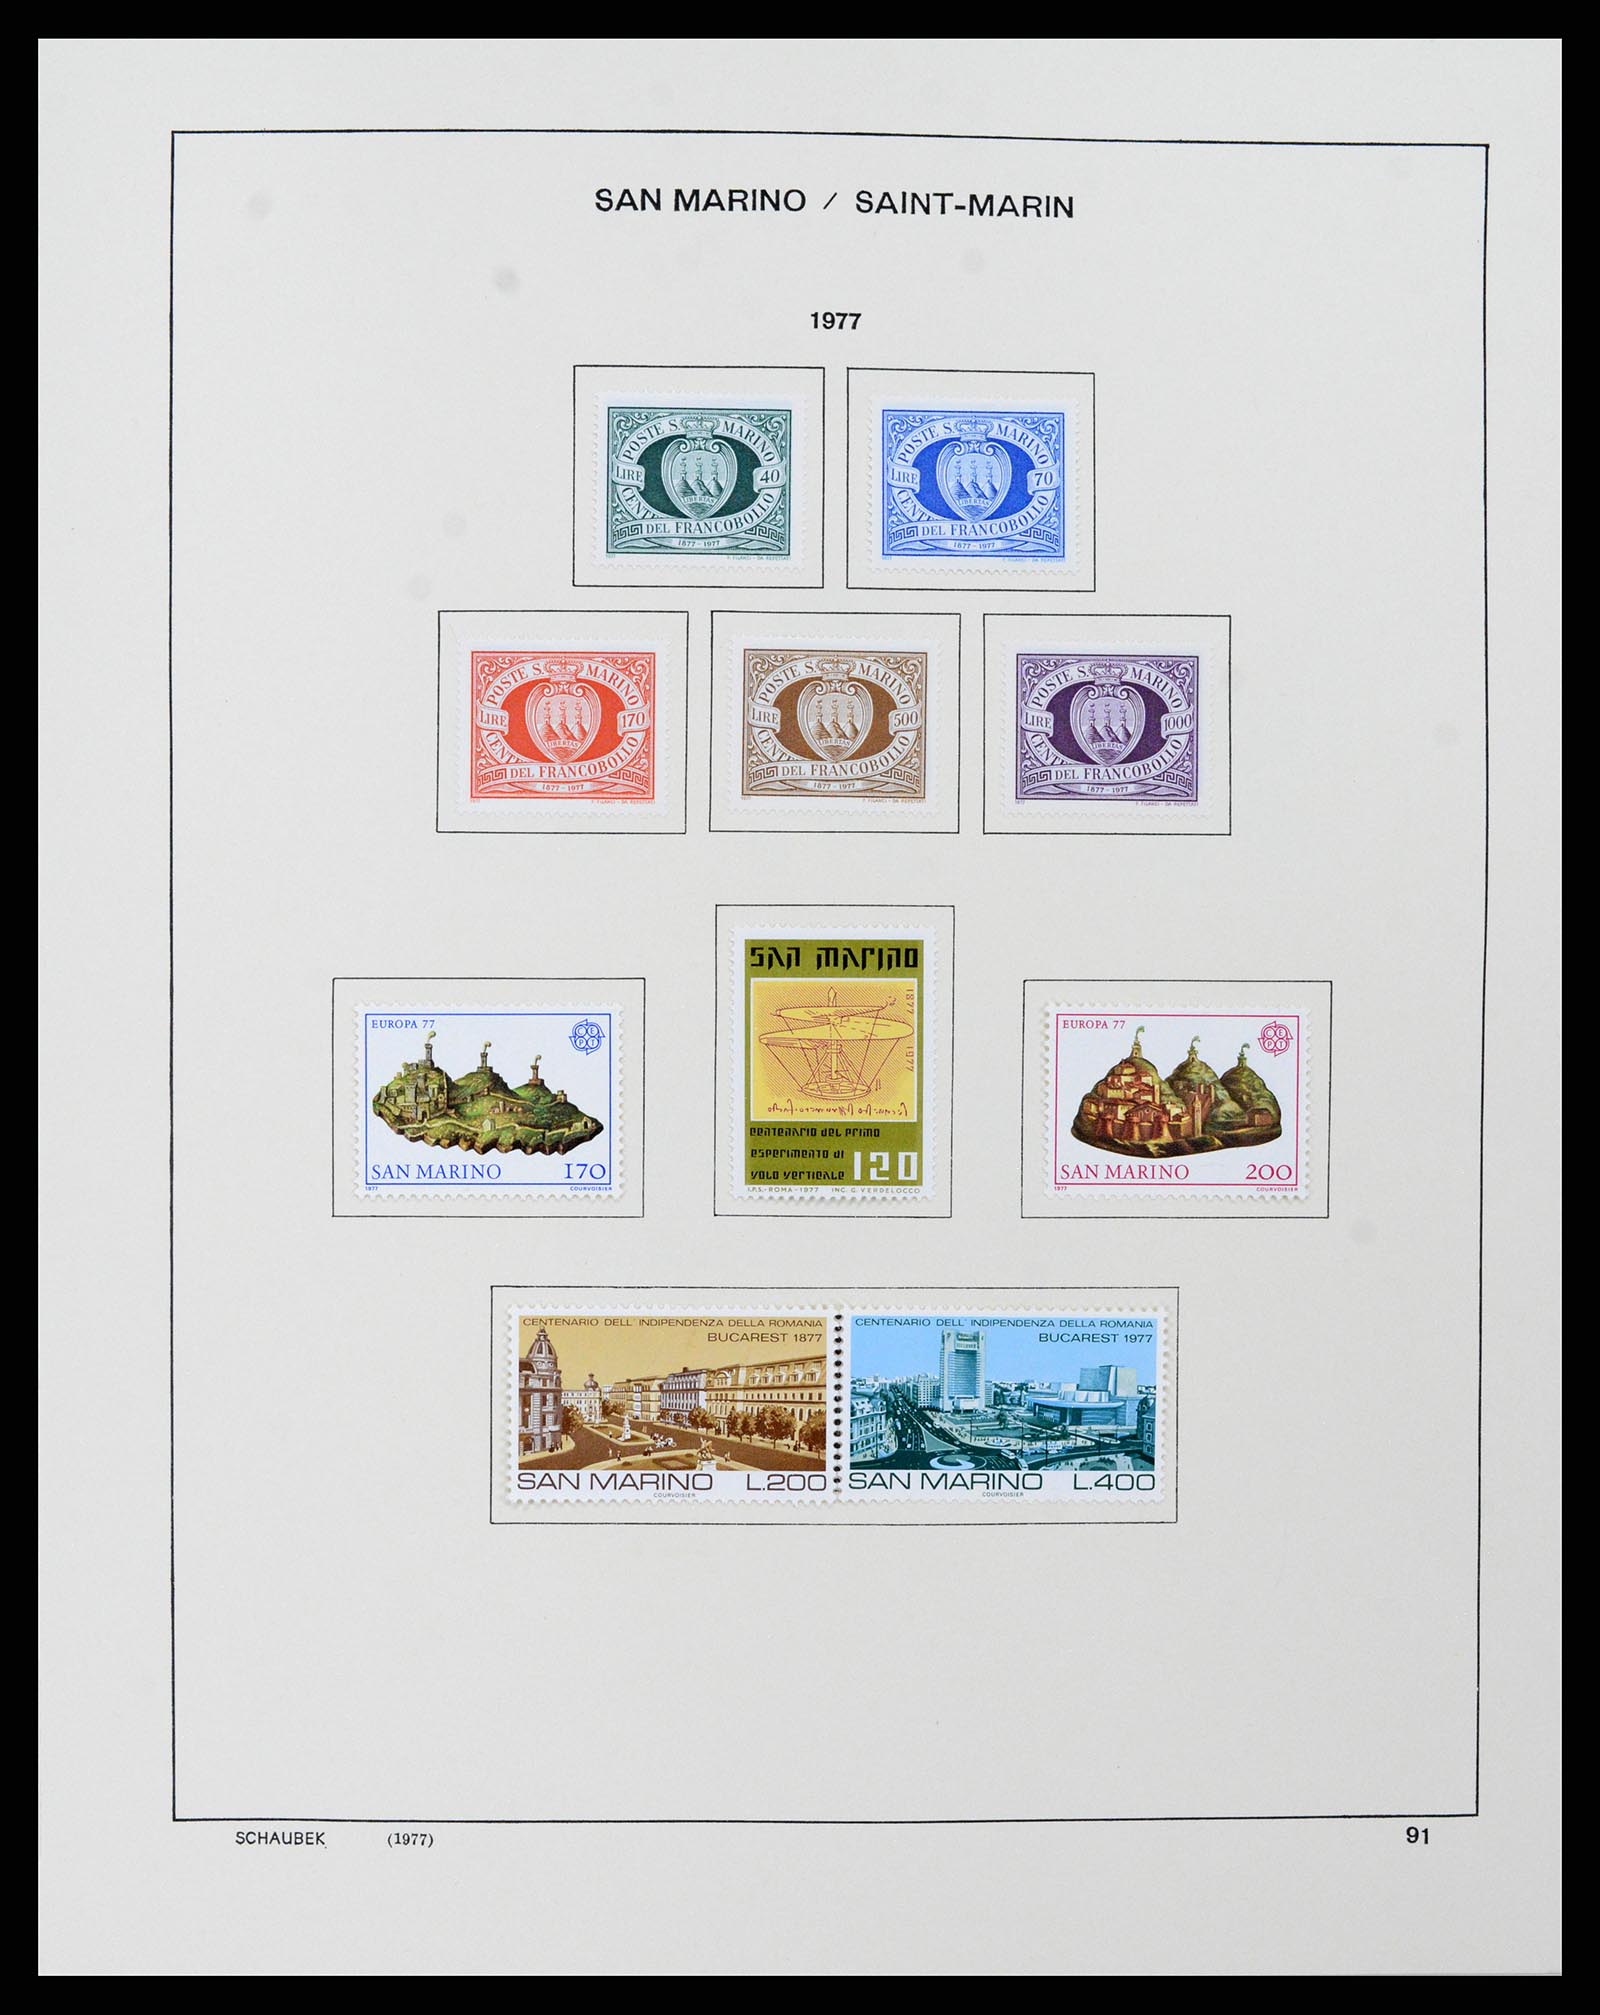 37556 093 - Stamp collection 37556 San Marino 1877-2017.